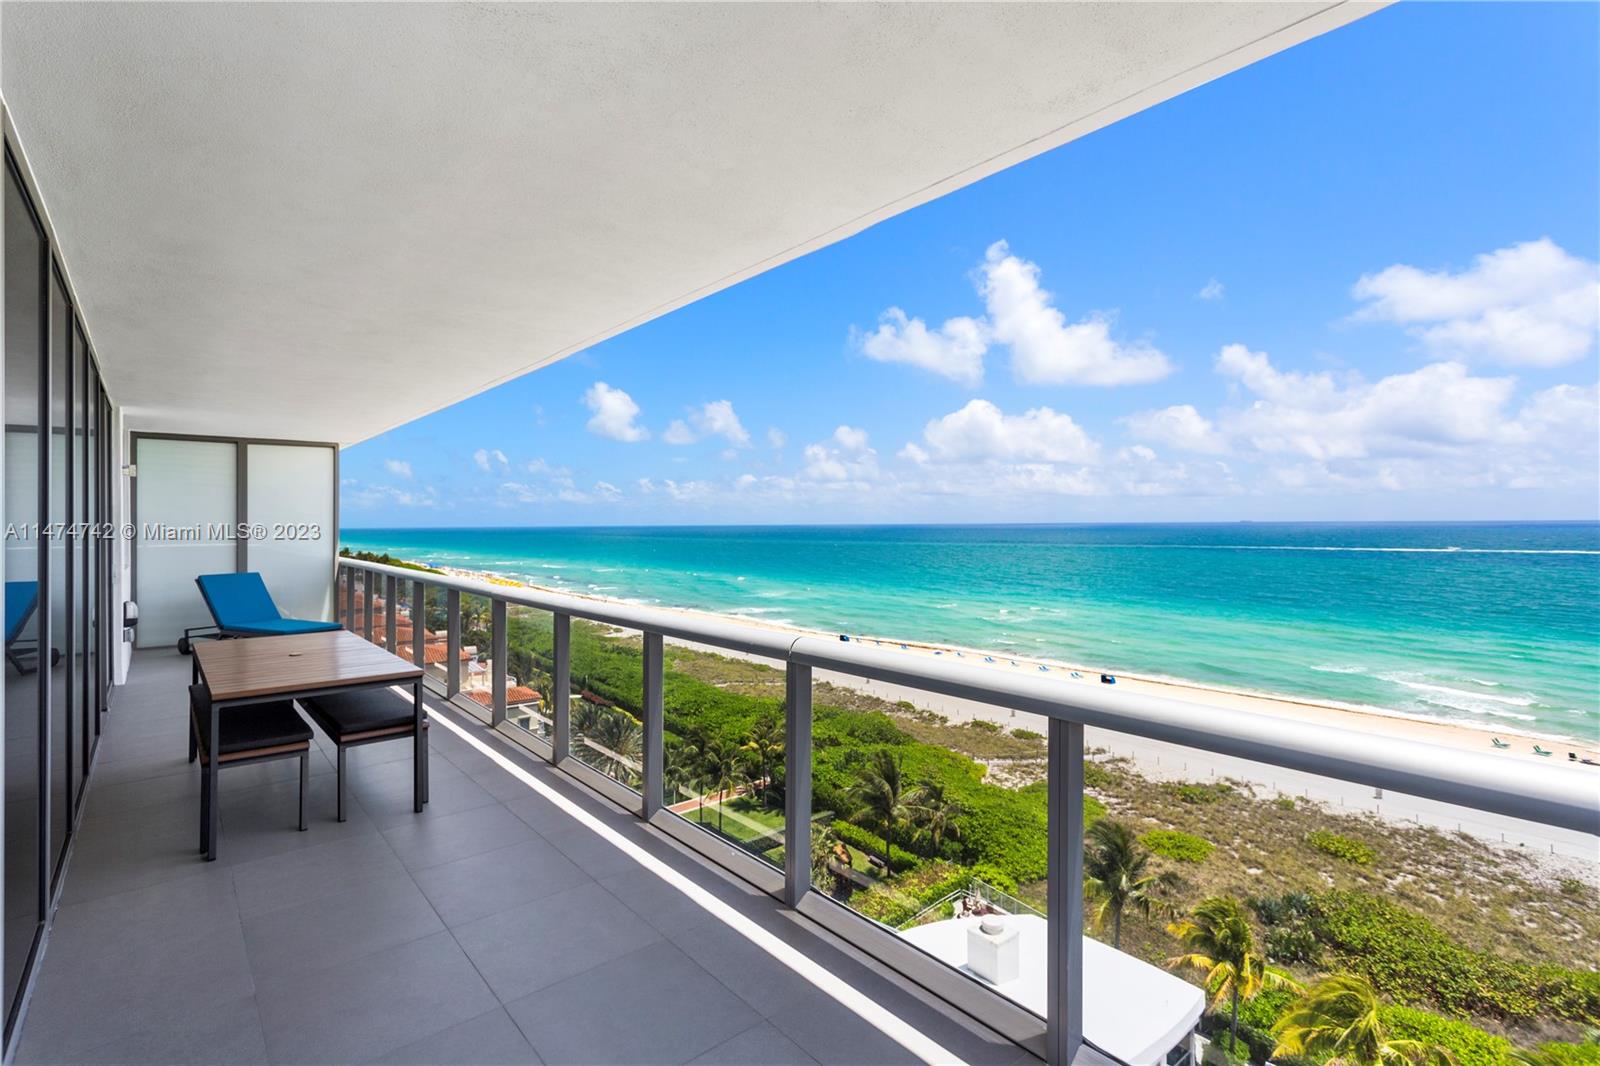 Rental Property at 5875 Collins Ave 1102, Miami Beach, Miami-Dade County, Florida - Bedrooms: 3 
Bathrooms: 4  - $20,000 MO.